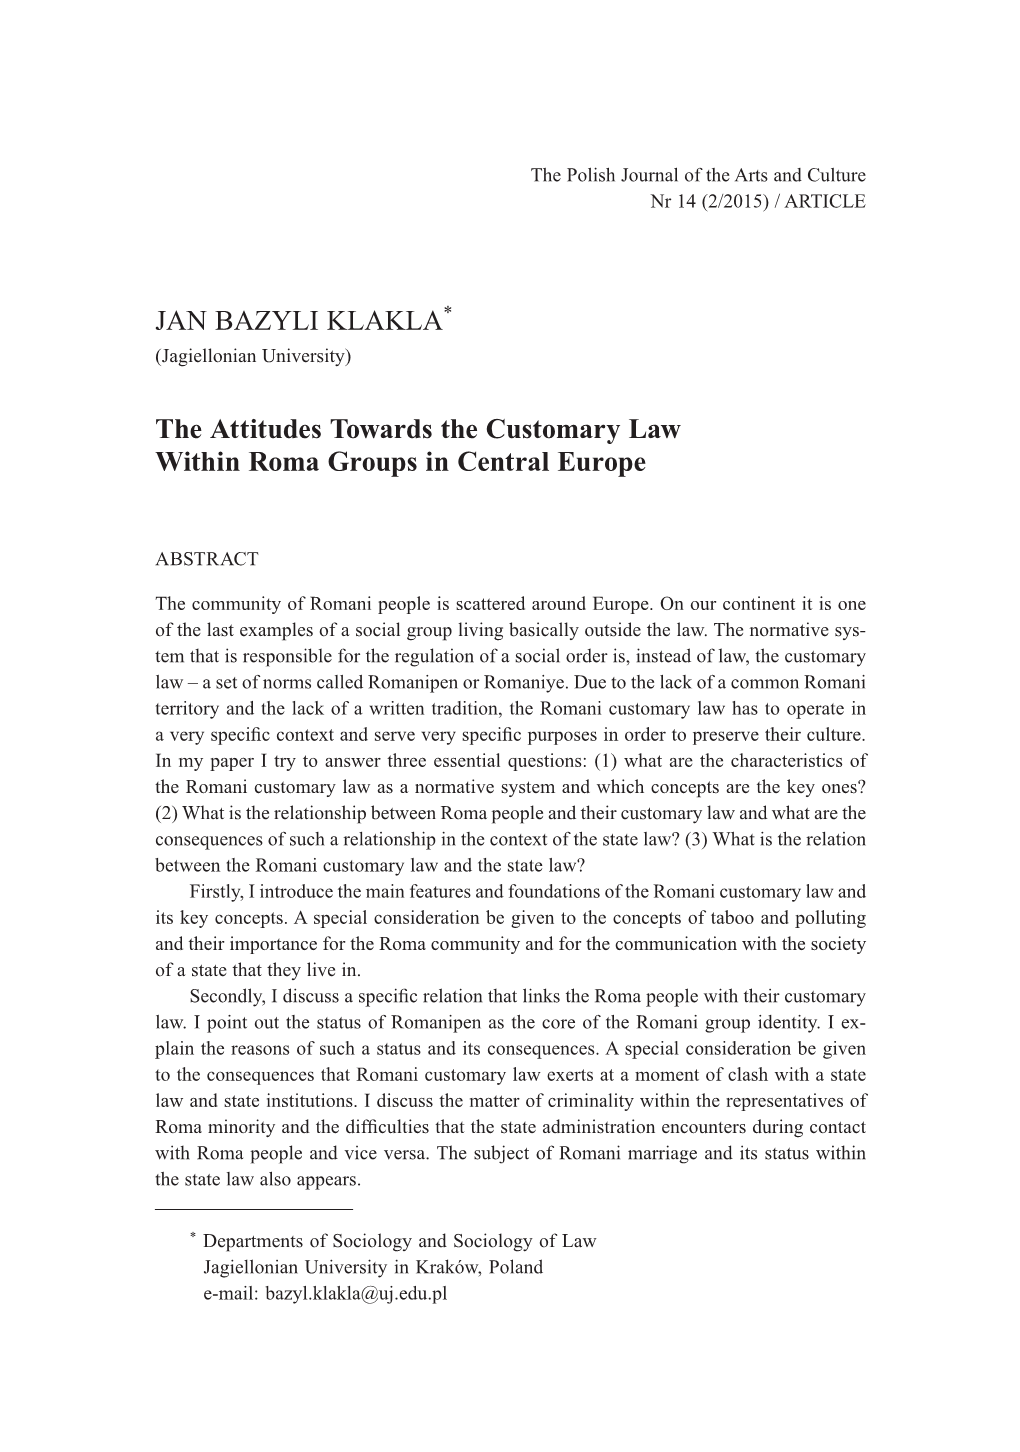 JAN BAZYLI KLAKLA* the Attitudes Towards the Customary Law Within